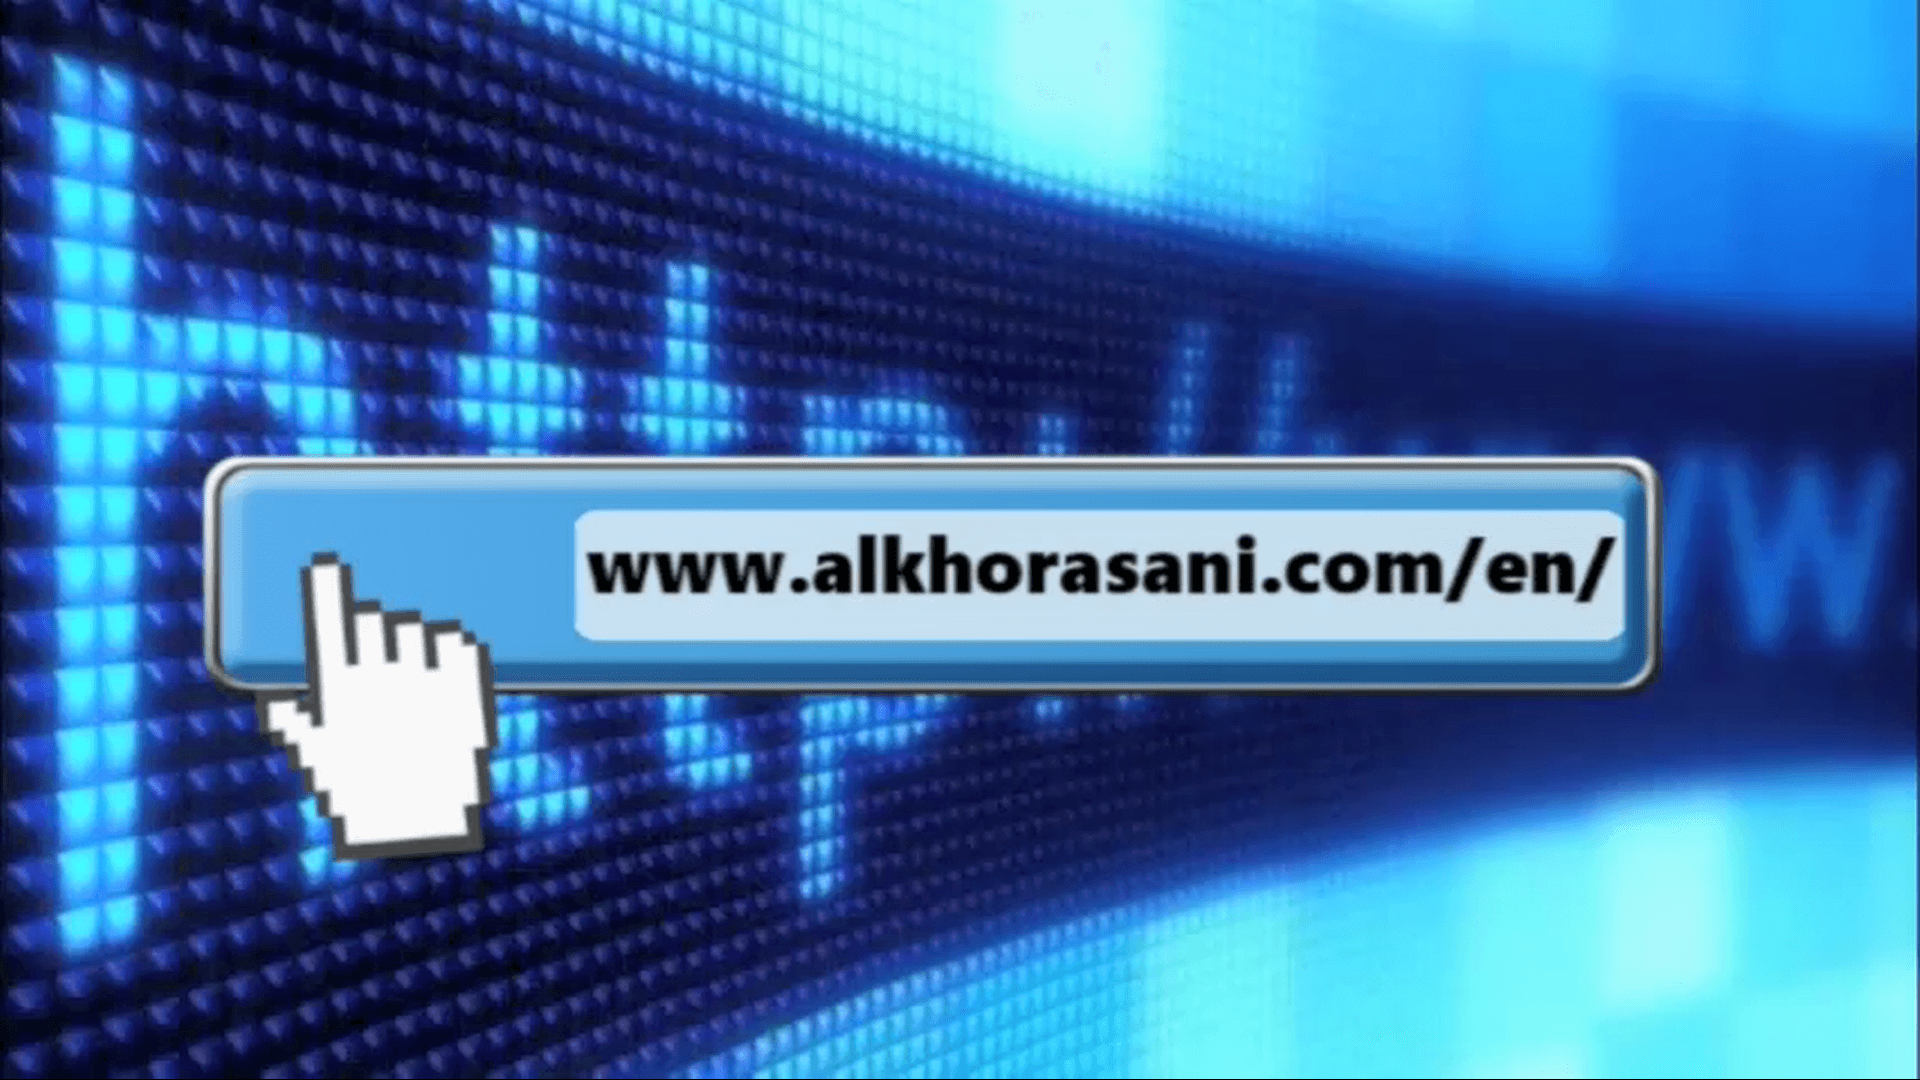 About the website Alkhorasani.com